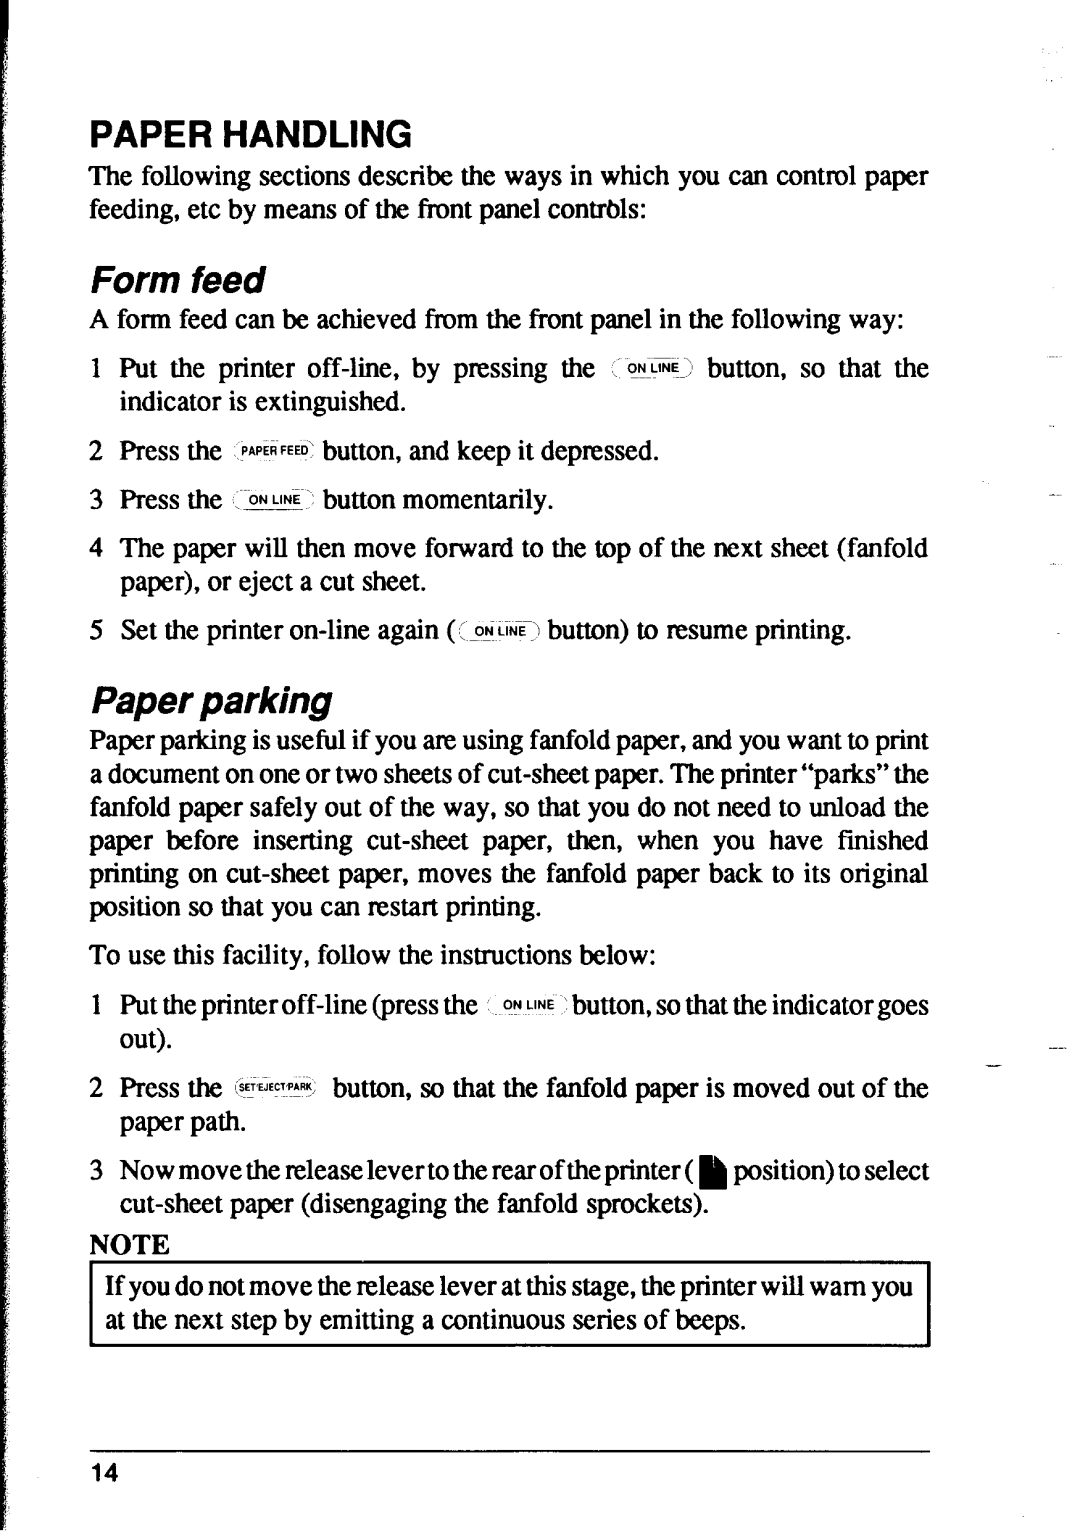 Star Micronics XR-1500, XR-1000 user manual Paper Handling, Form feed, Paper parking 